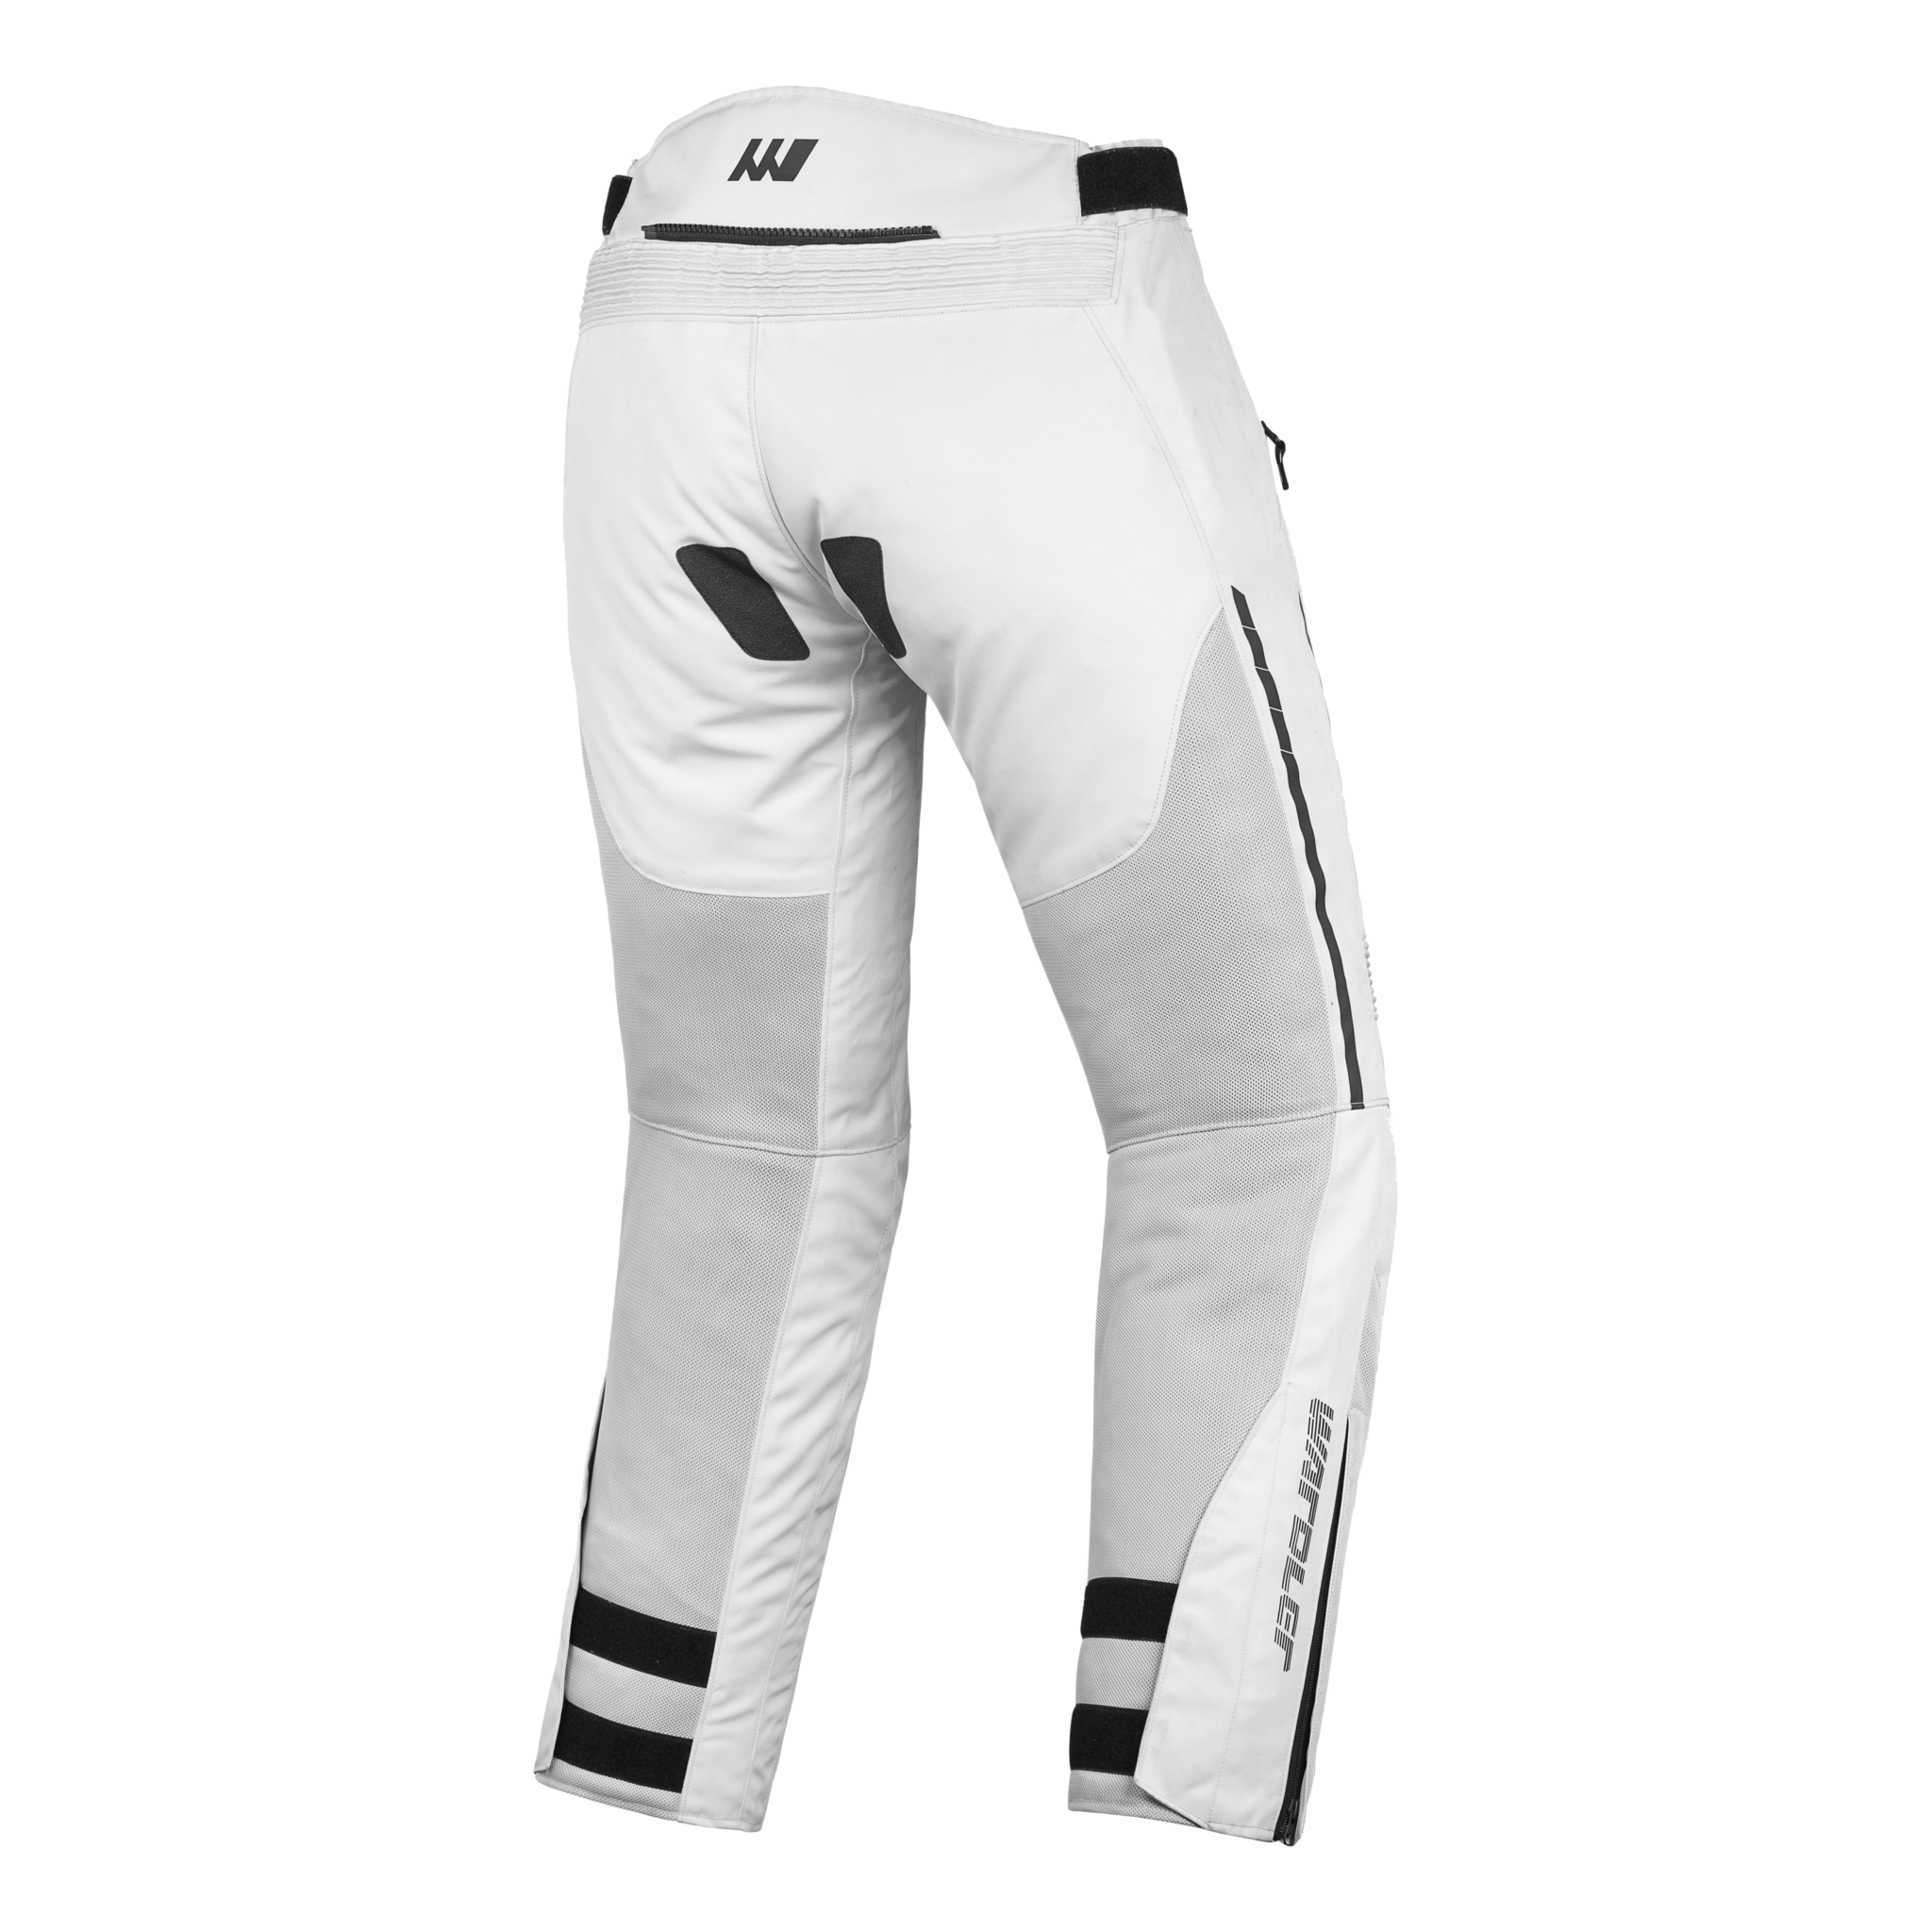 Mesh Summer Motorcycle Pants breathable waterproof silver backpant